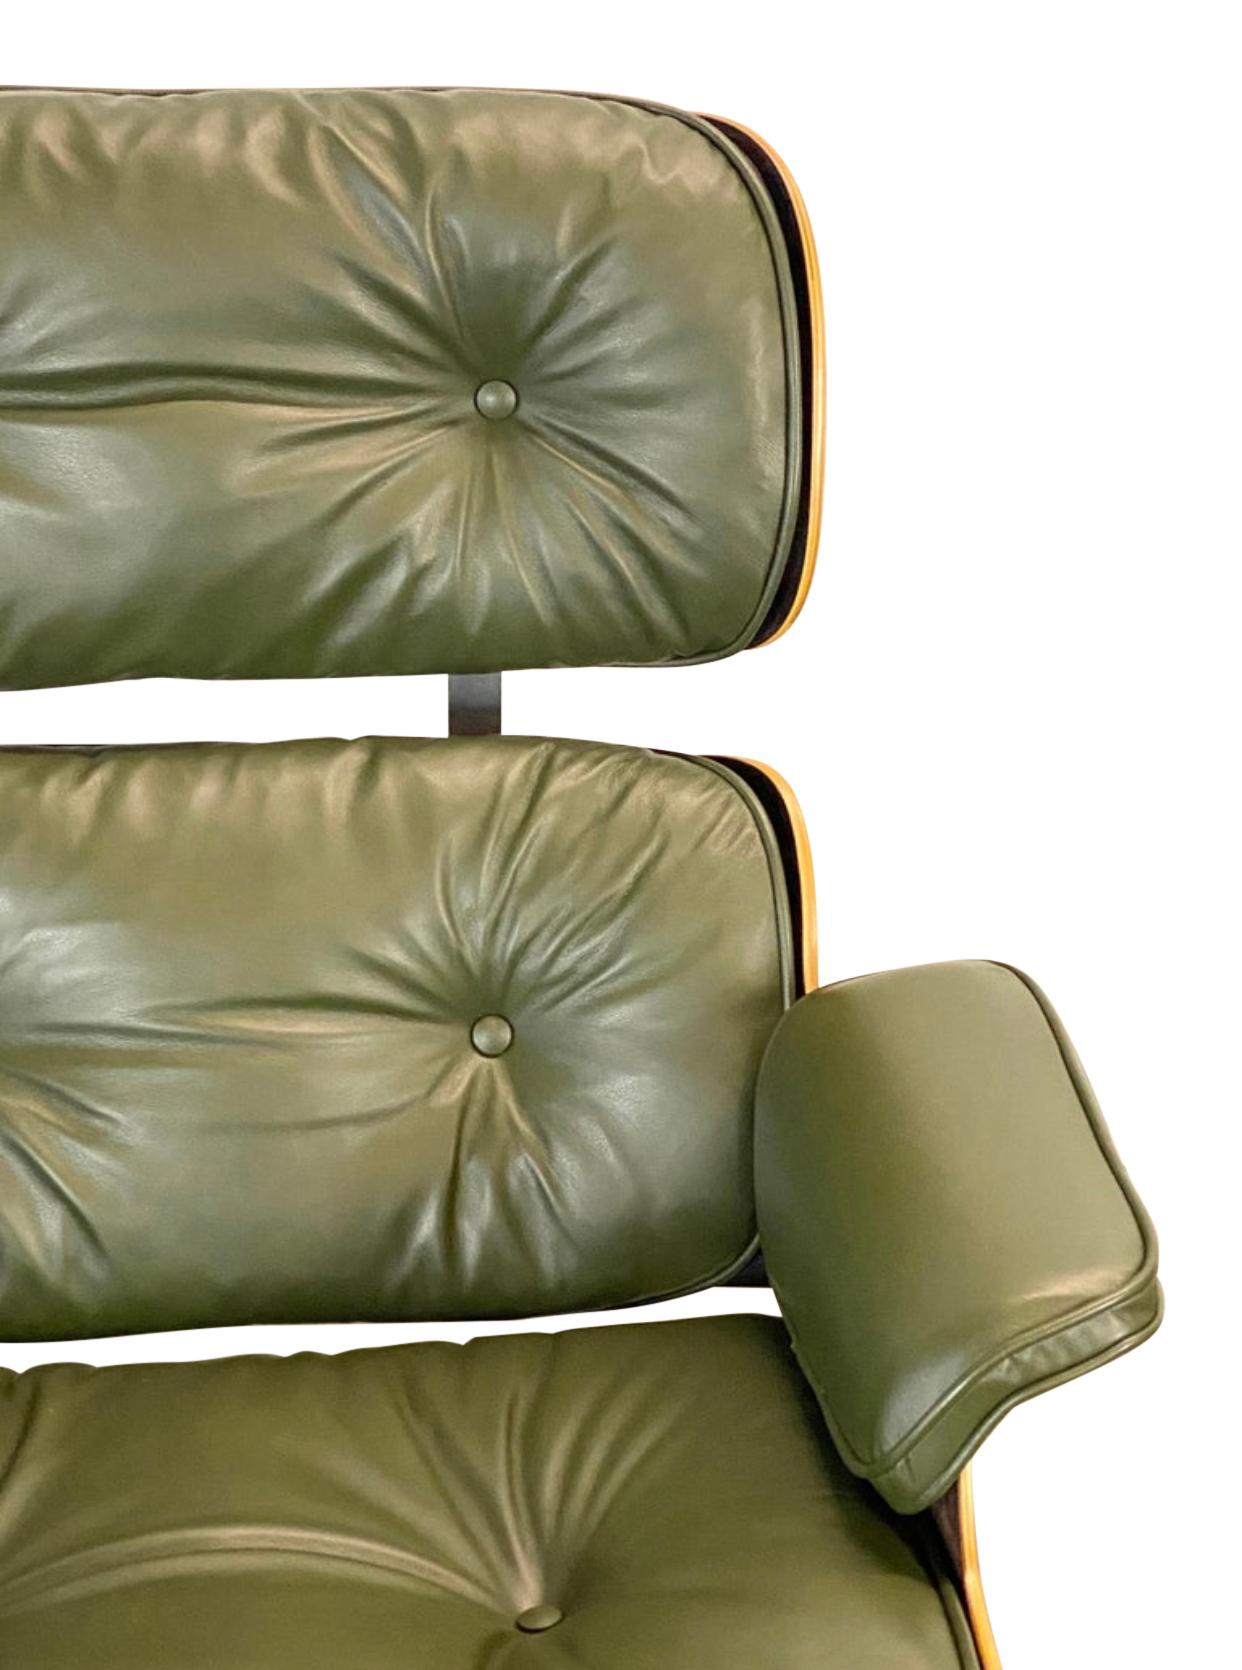 Gorgeous Avocado Eames Lounge Chair and Ottoman 1